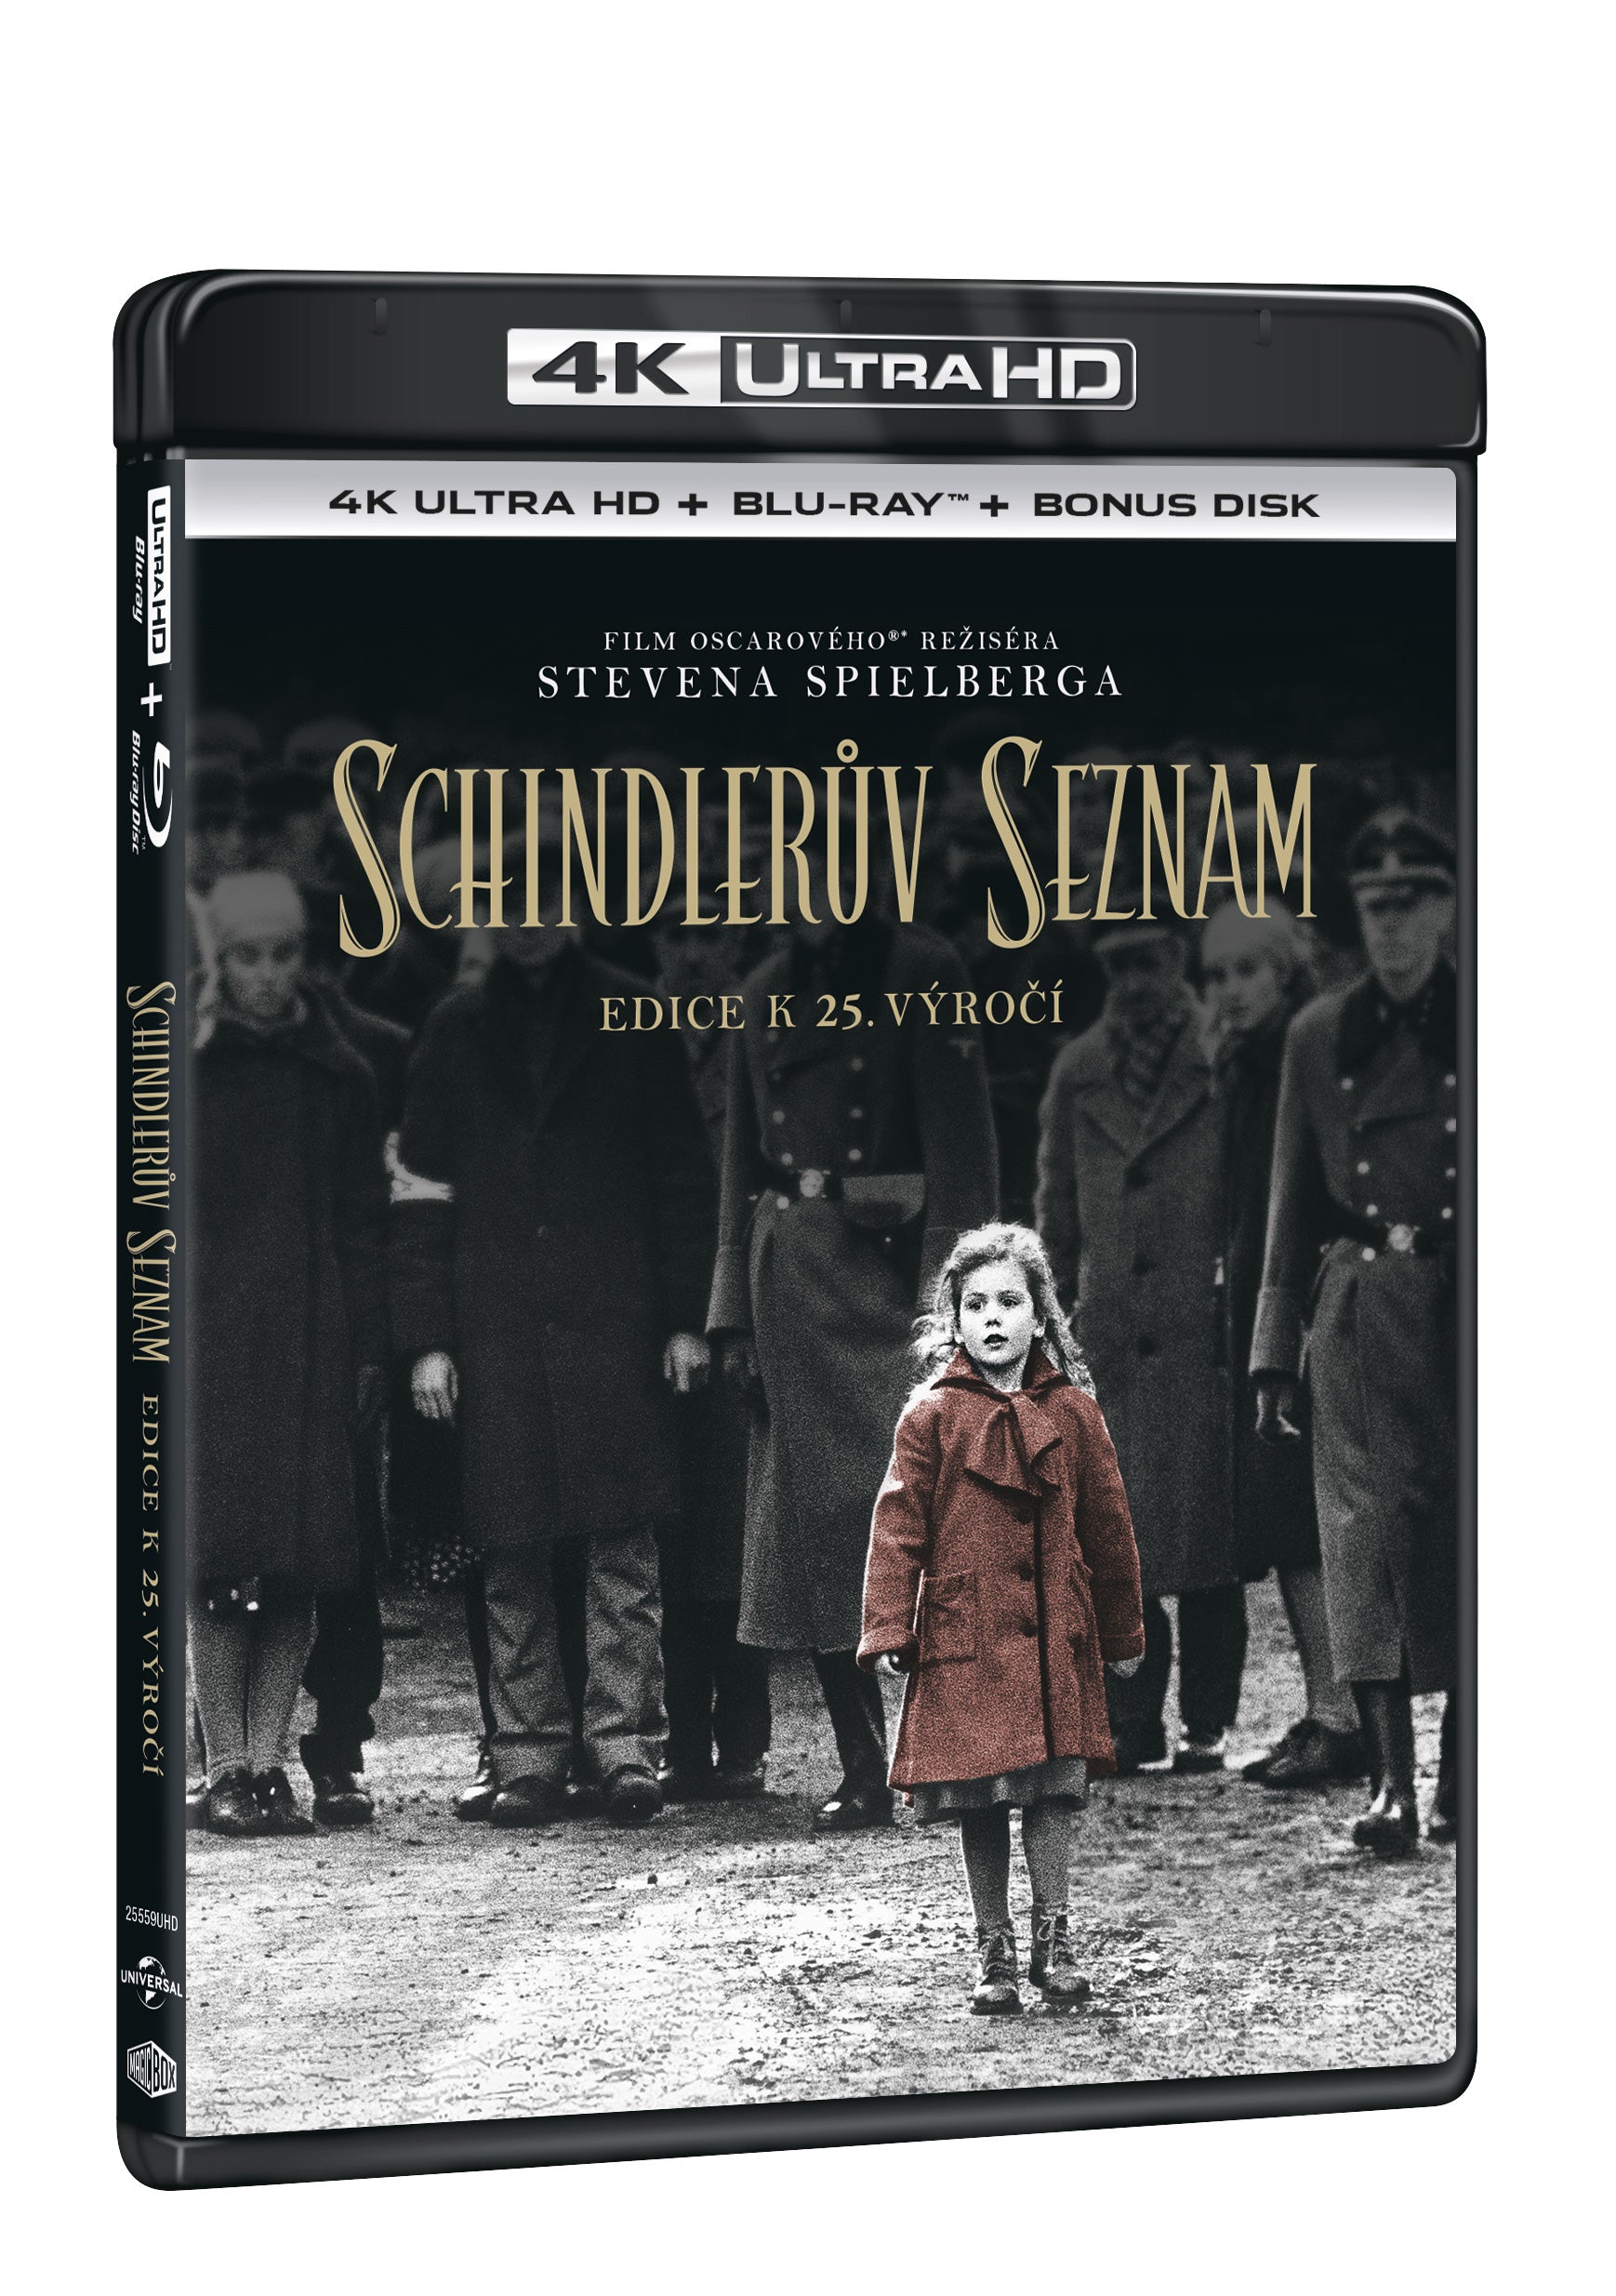 Schindleruv seznam vyrocni edice 25 let 3BD (UHD+BD+BD bonus disk) / Schindler’s List 25th Anniversary edition - Czech version